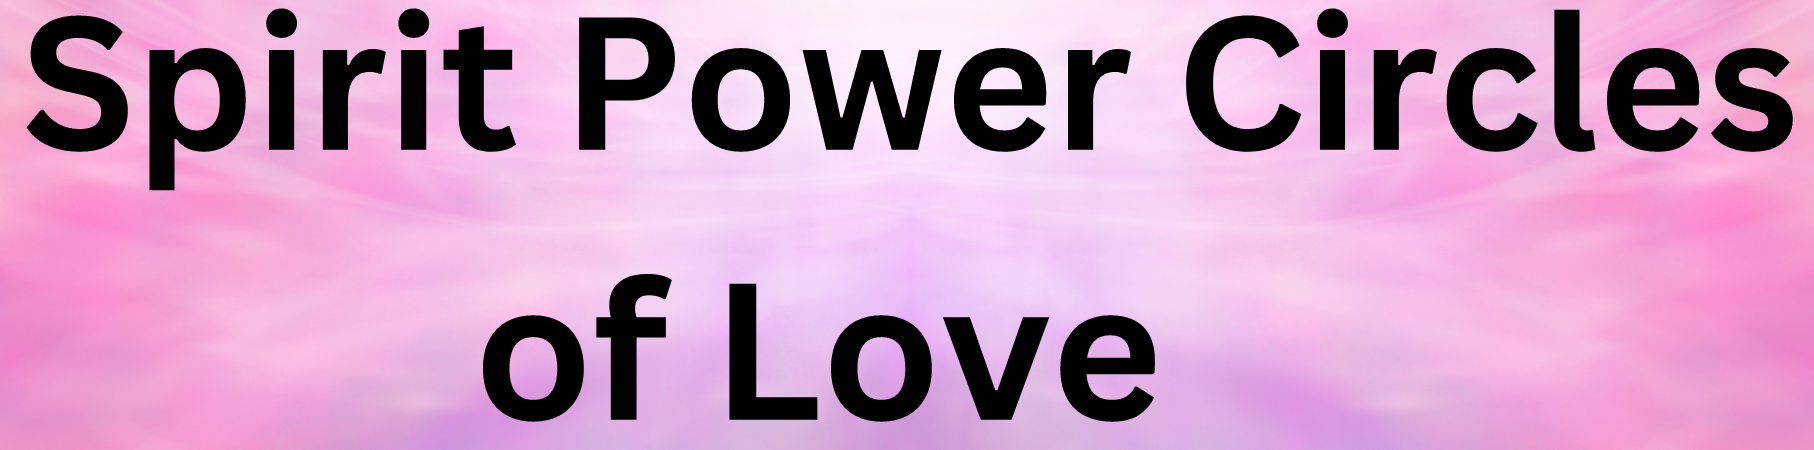 Spirit Power Circles LOVE